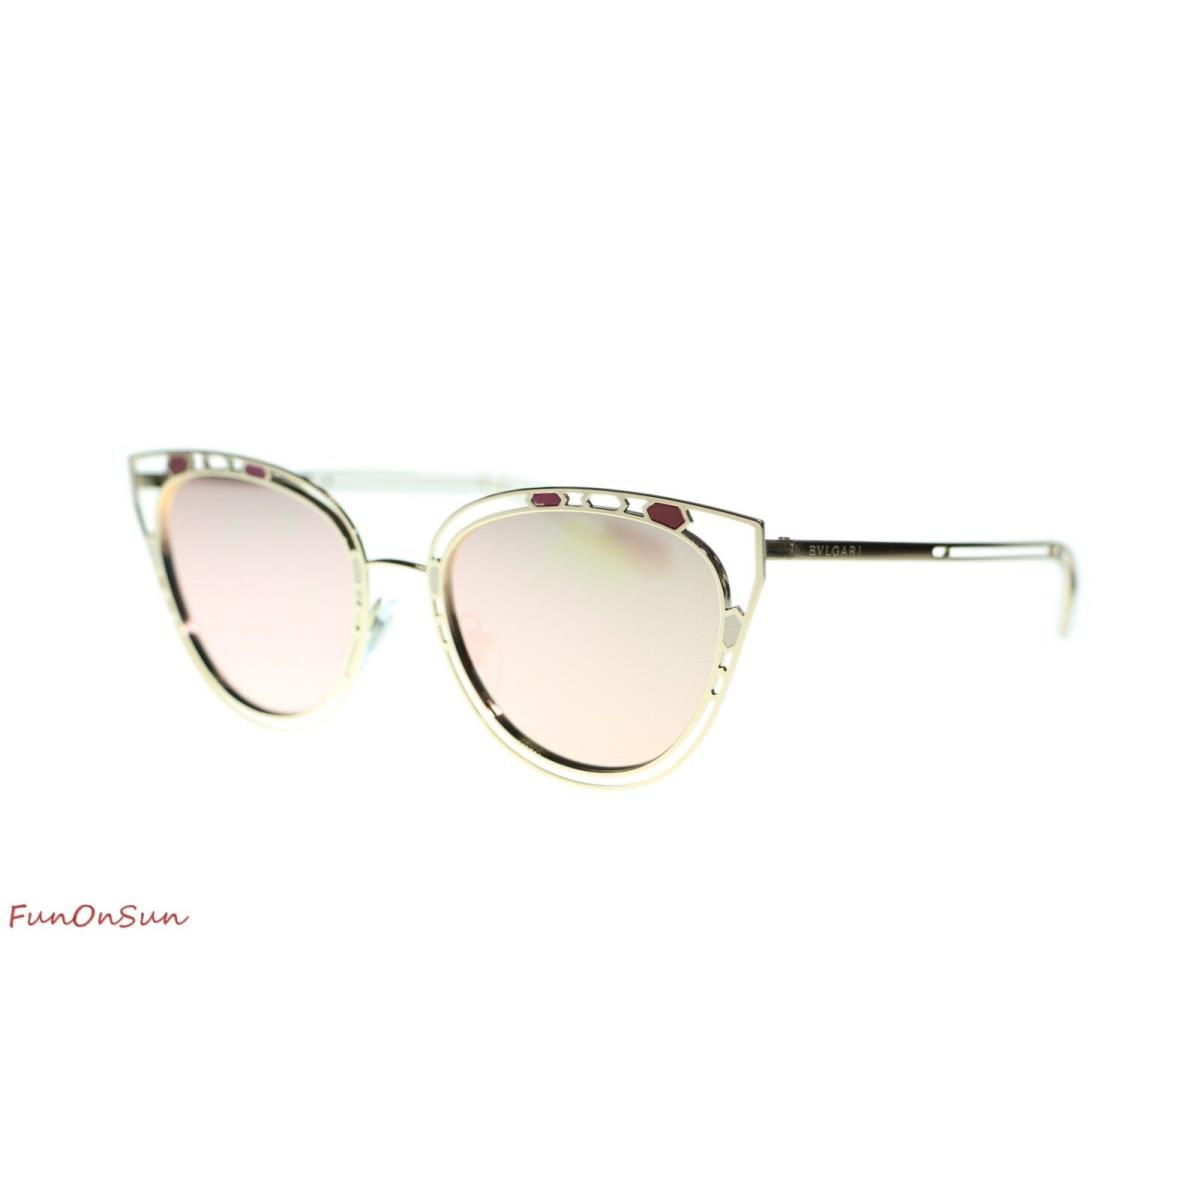 Bvlgari Cat Eye Sunglasses BV6104 20144Z Pink Gold/grey Mirror Rose Gold Lens